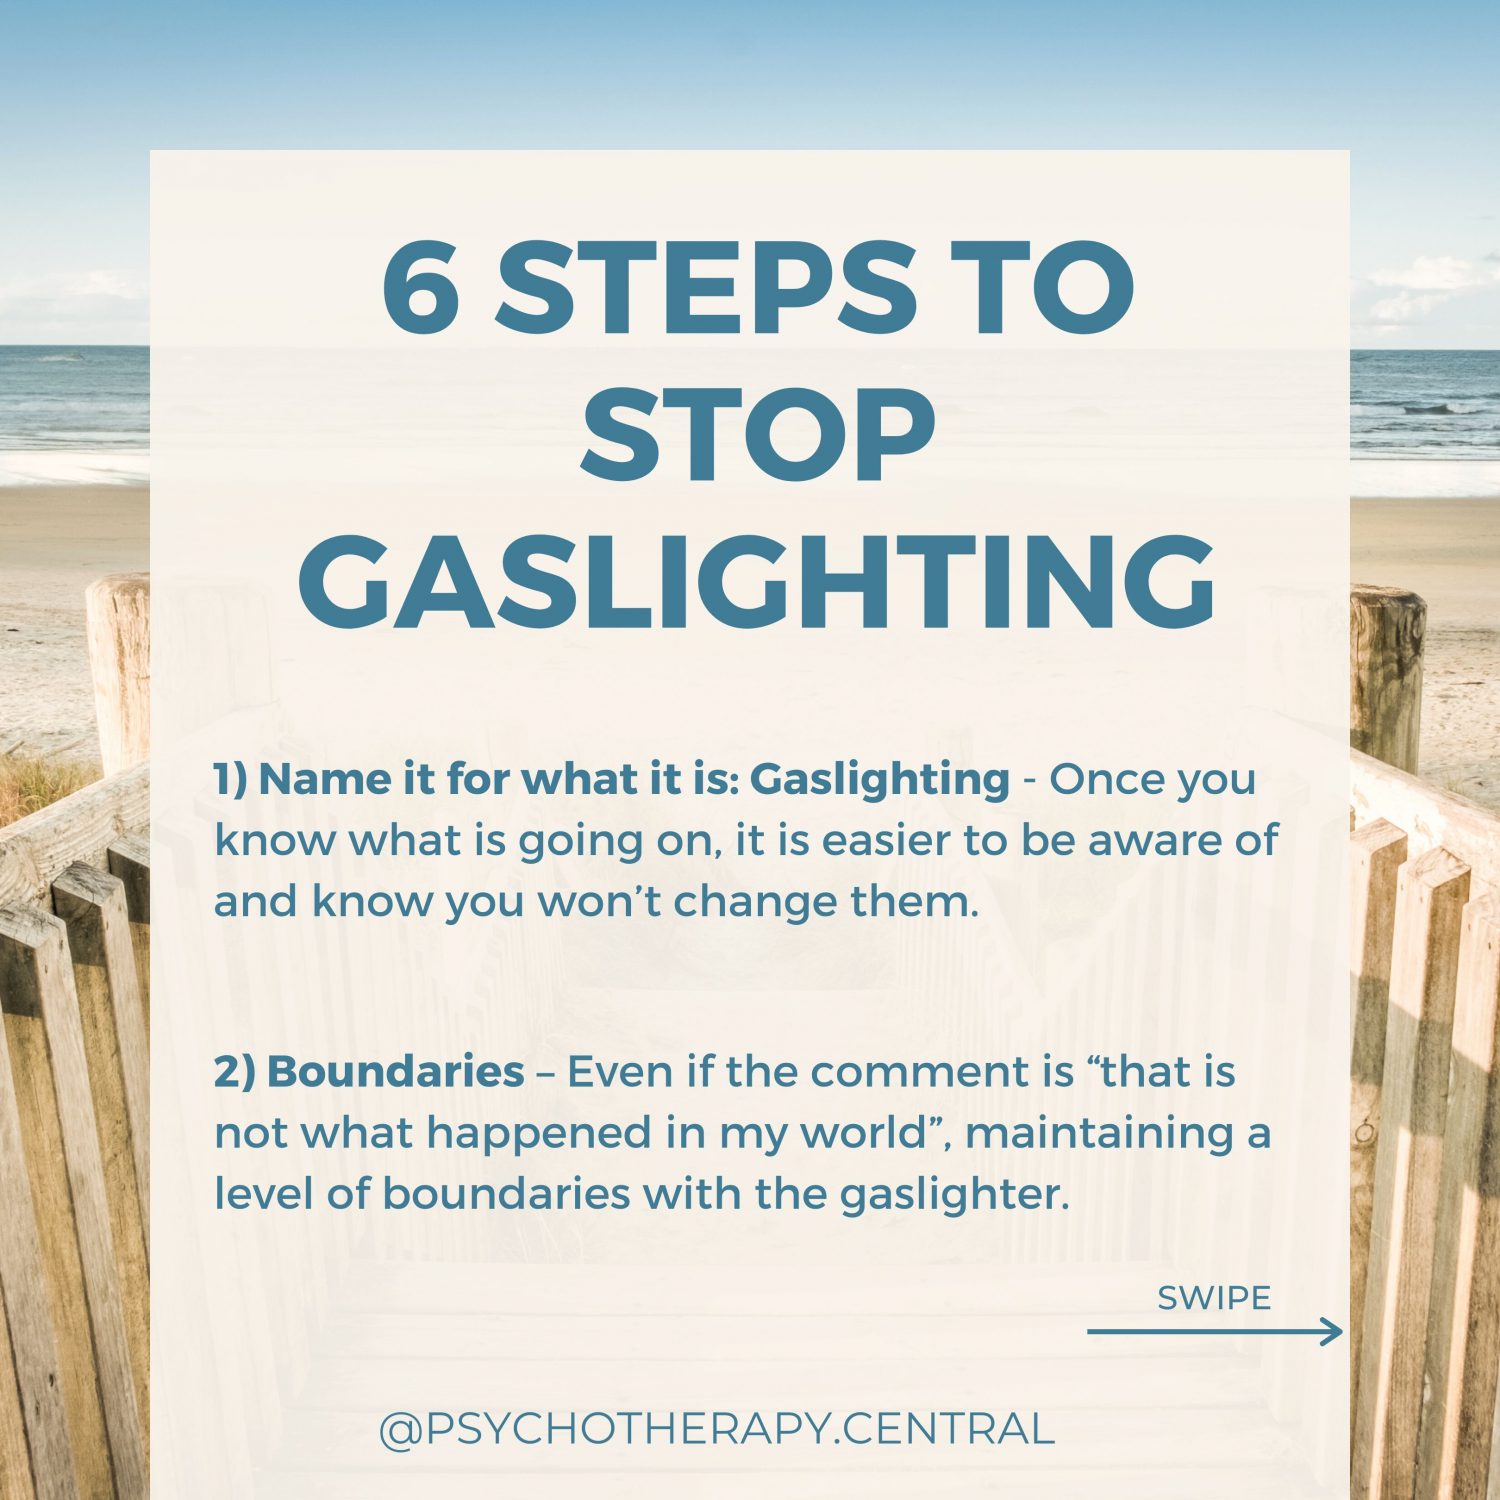 6 STEPS TO STOP GASLIGHTING